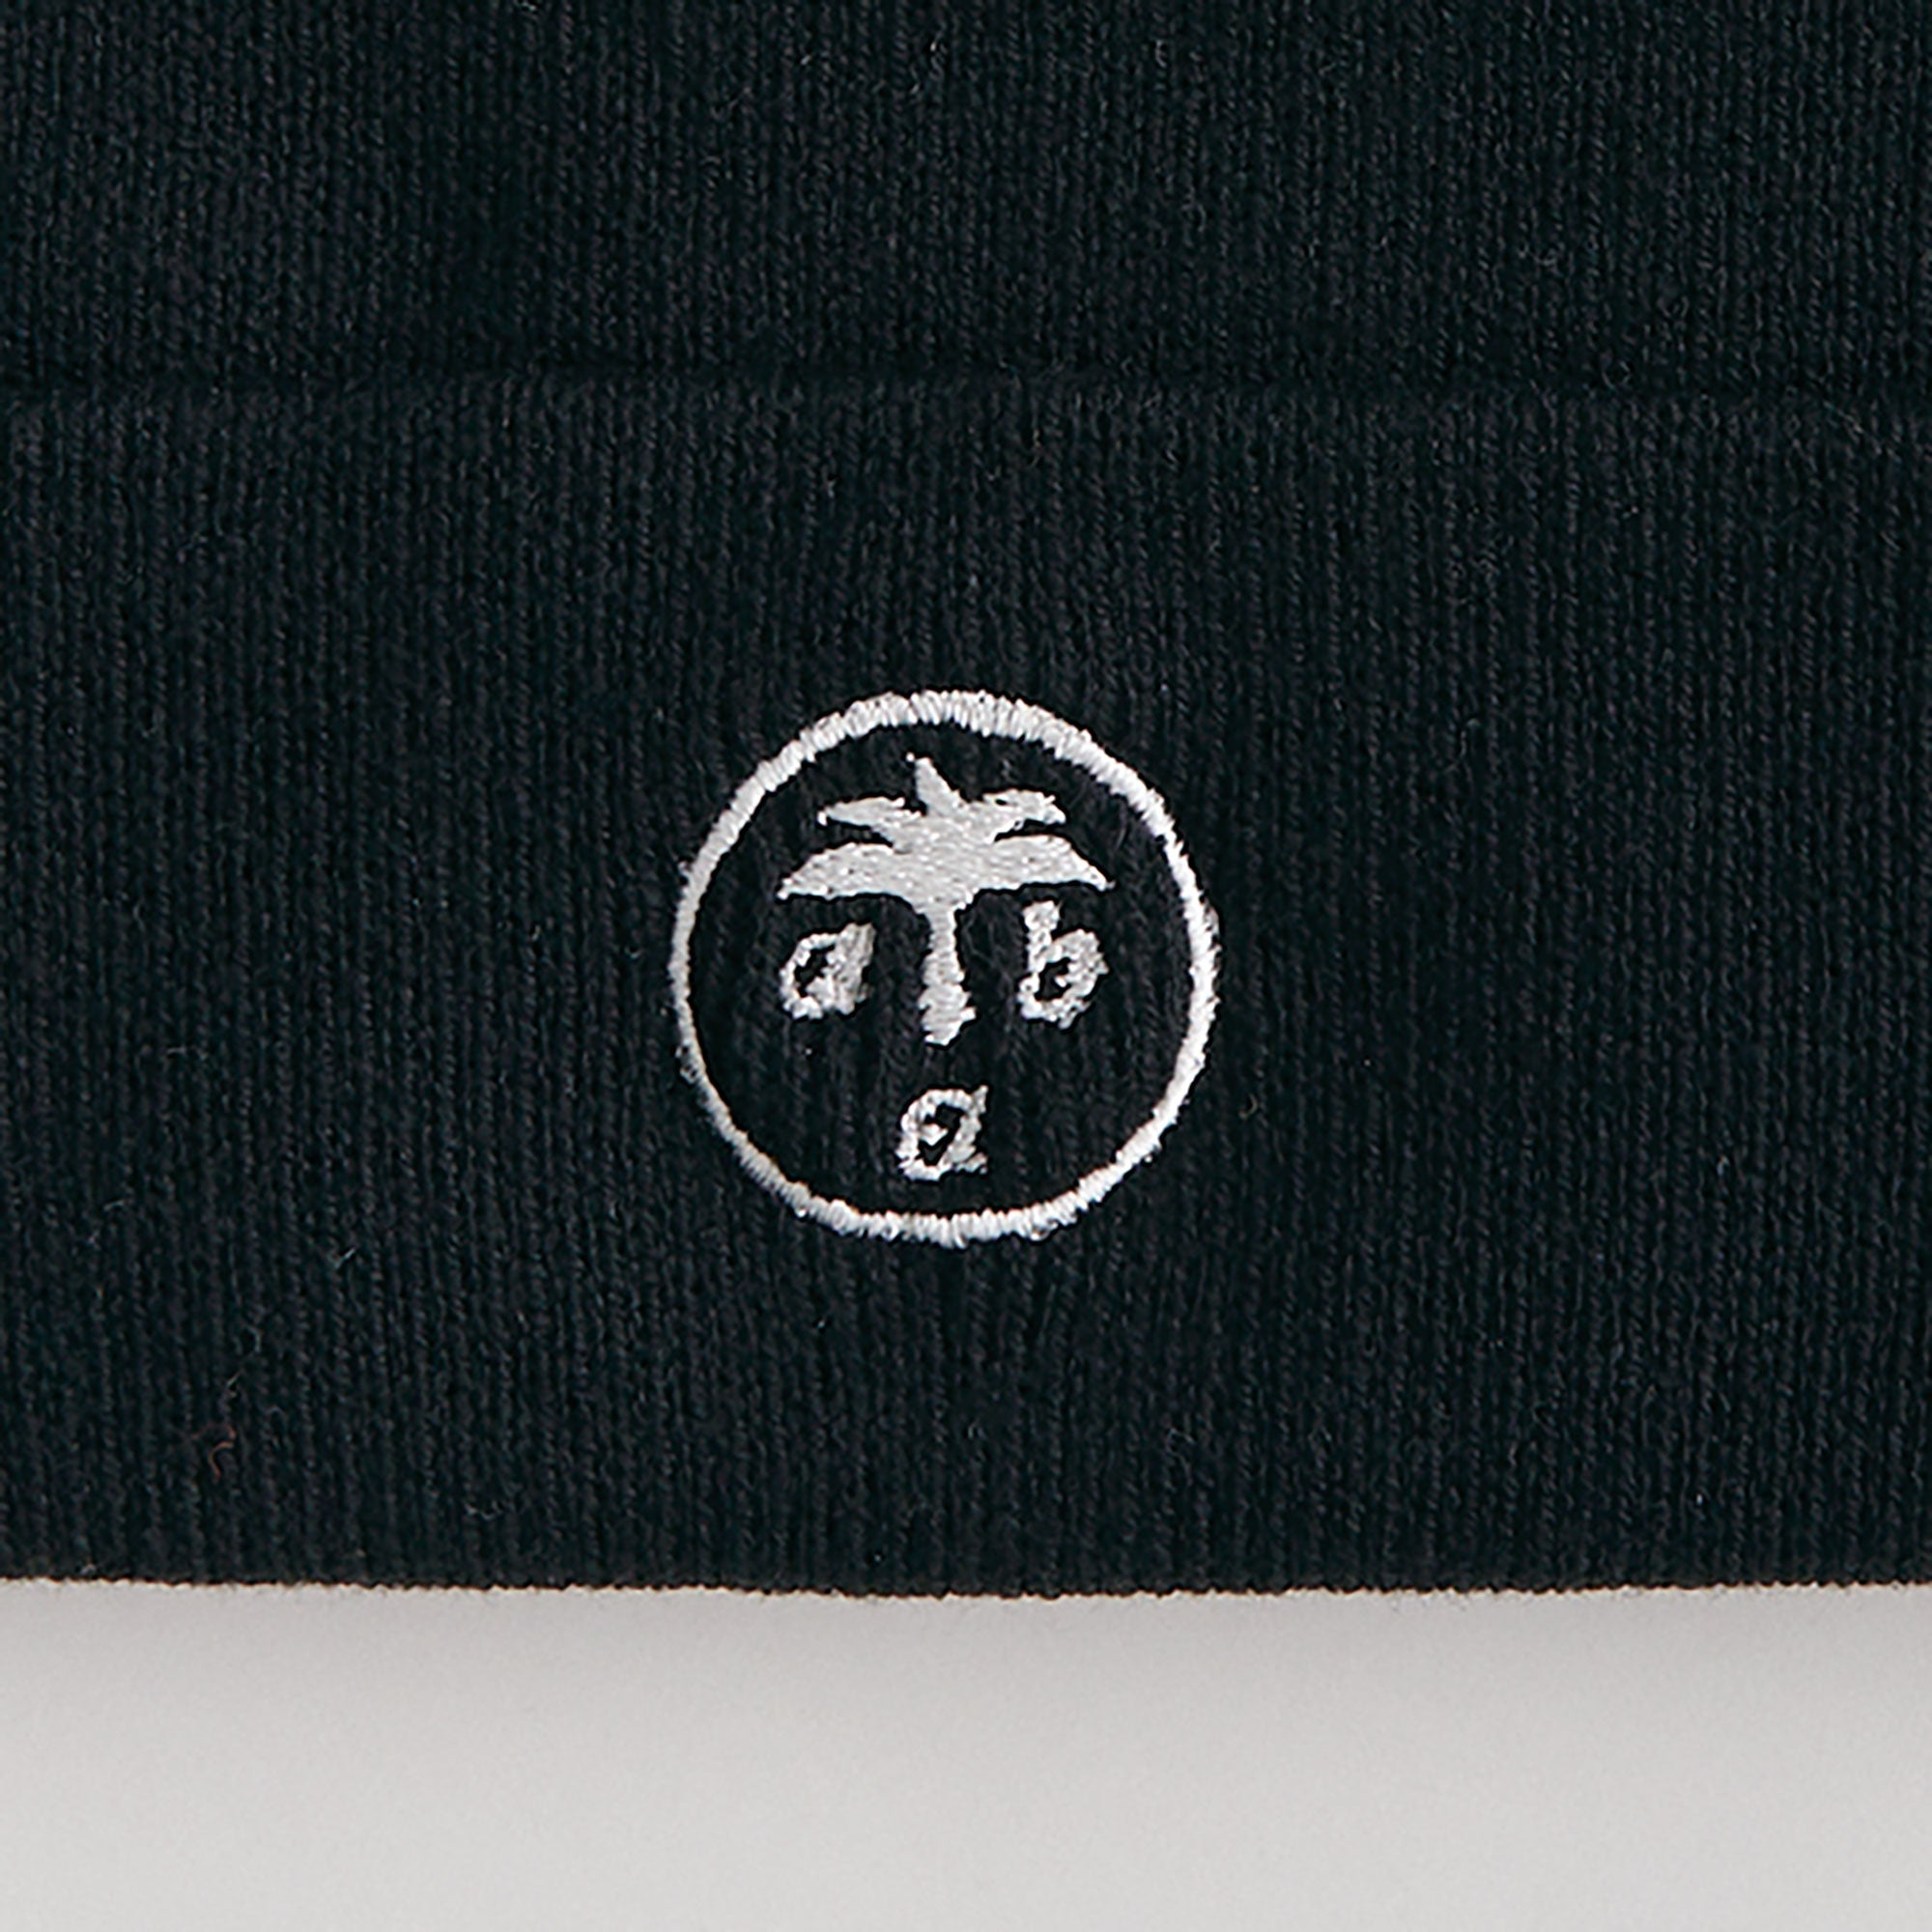 ABA logo knit cap Black